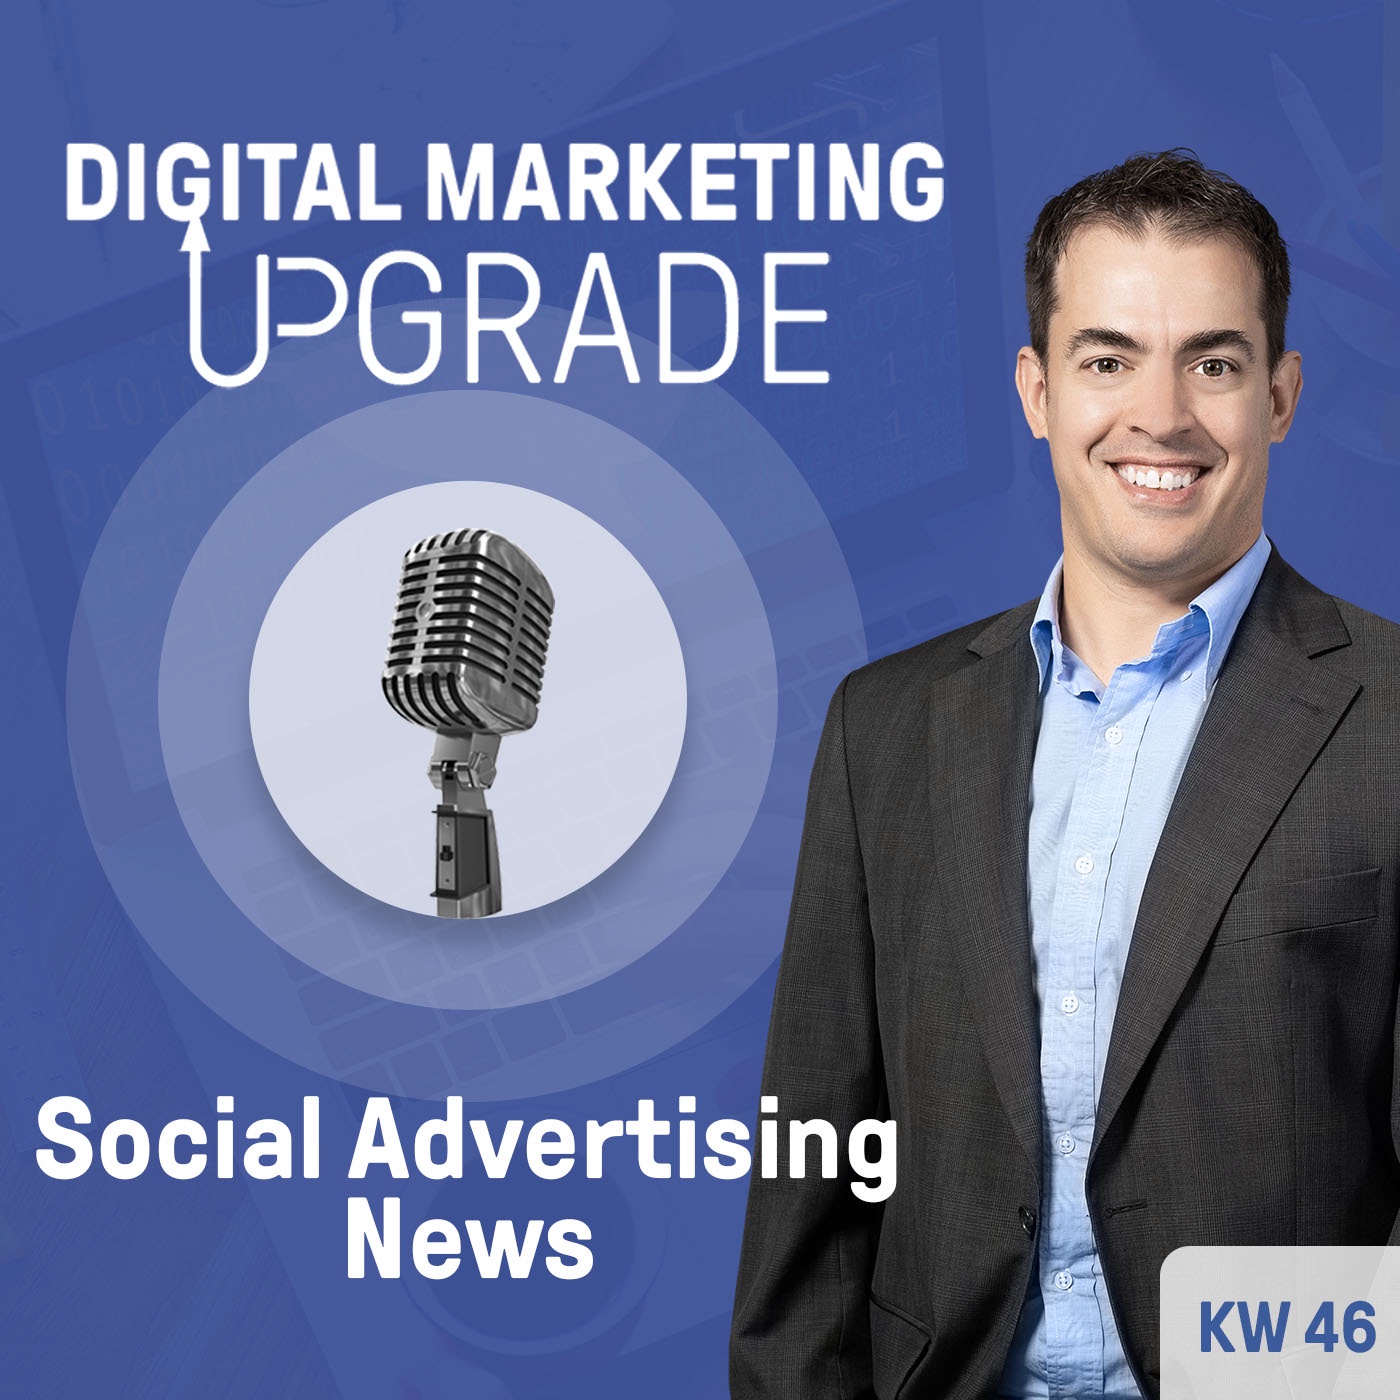 Social Advertising News - KW 46/22